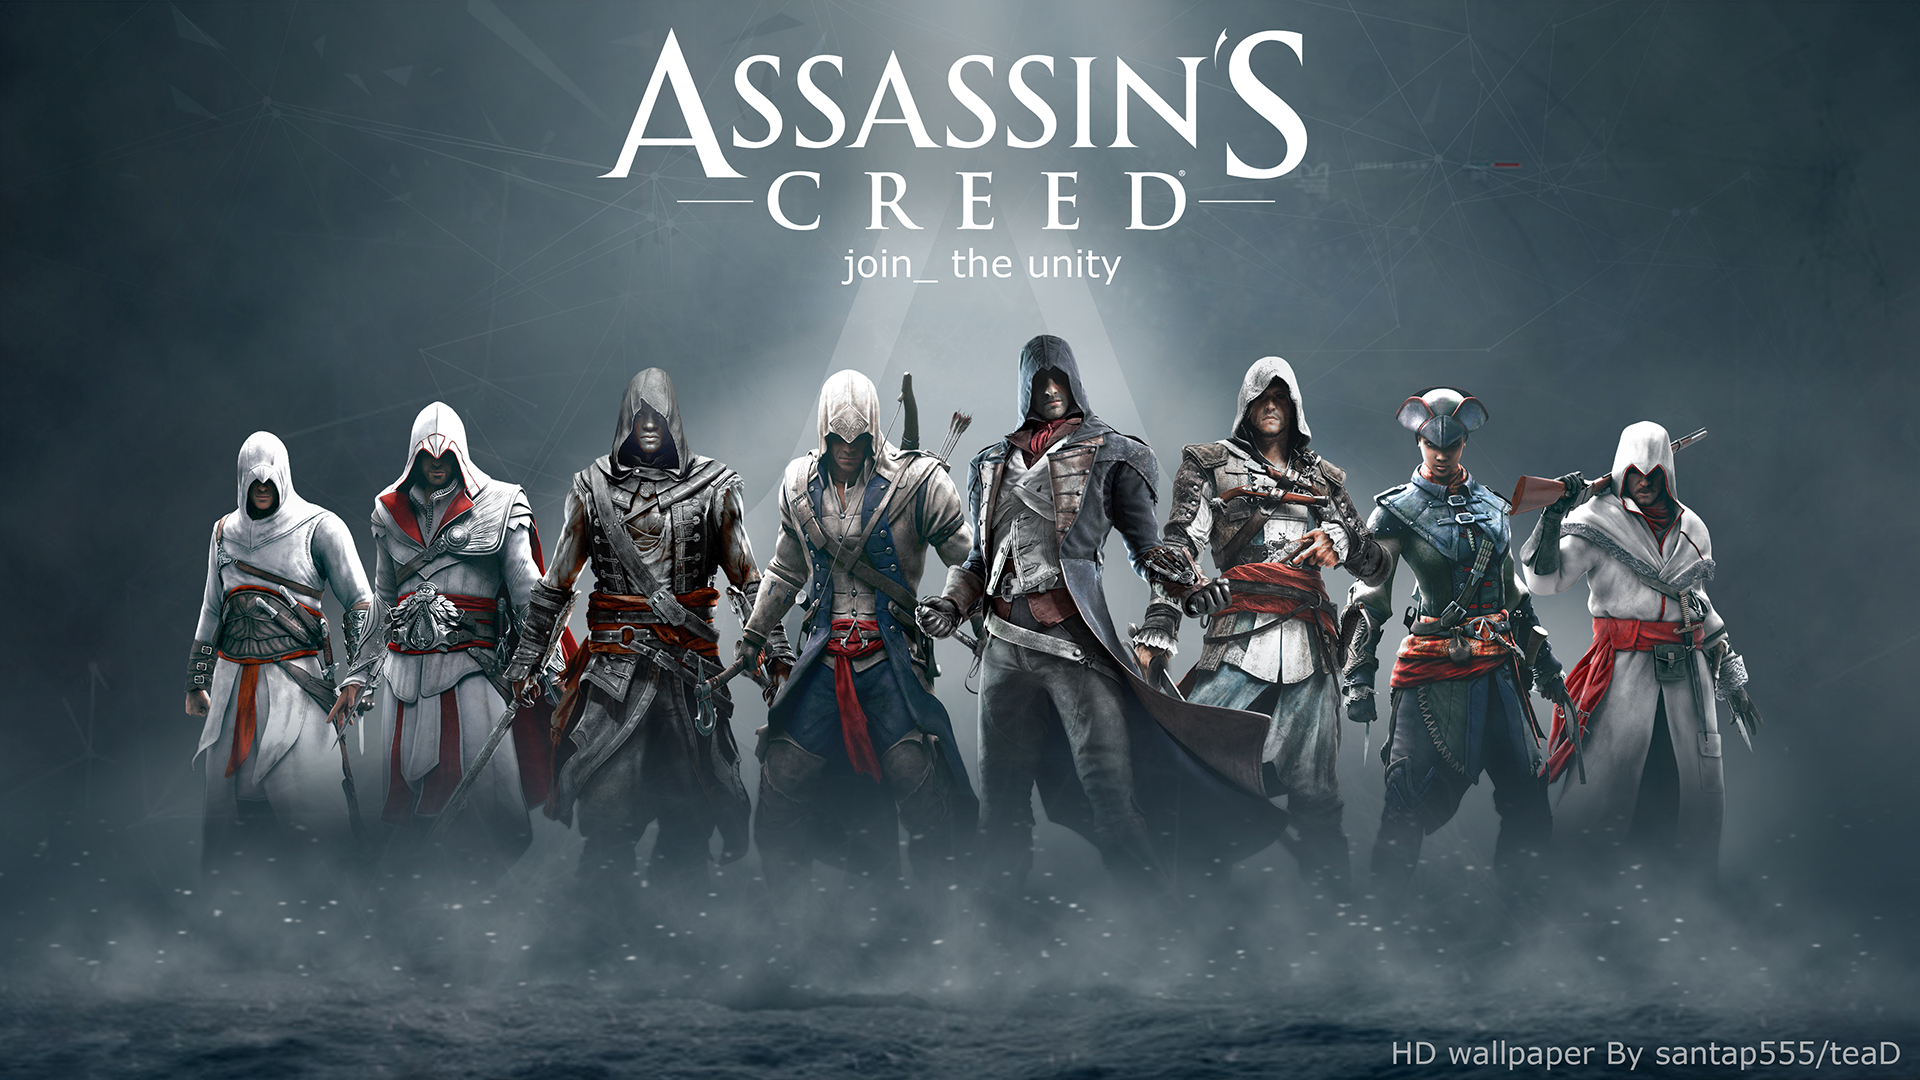 Assassin's Creed HD wallpaper by teaD by santap555 deviantart com